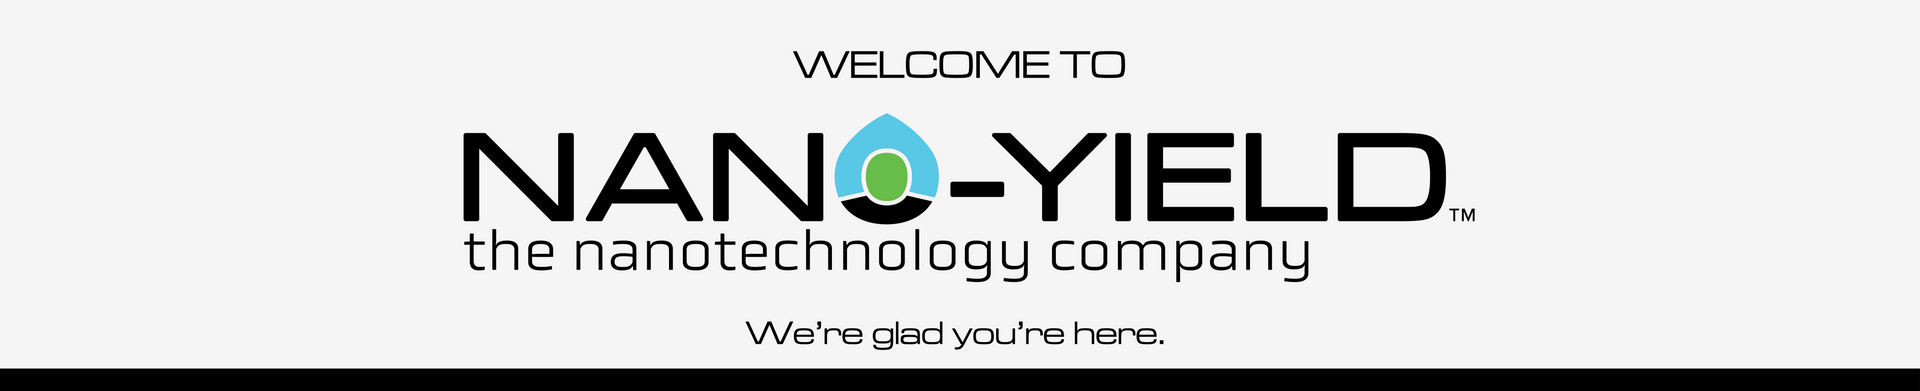 Introducing Nano-Yield, the nanotechnology company. 